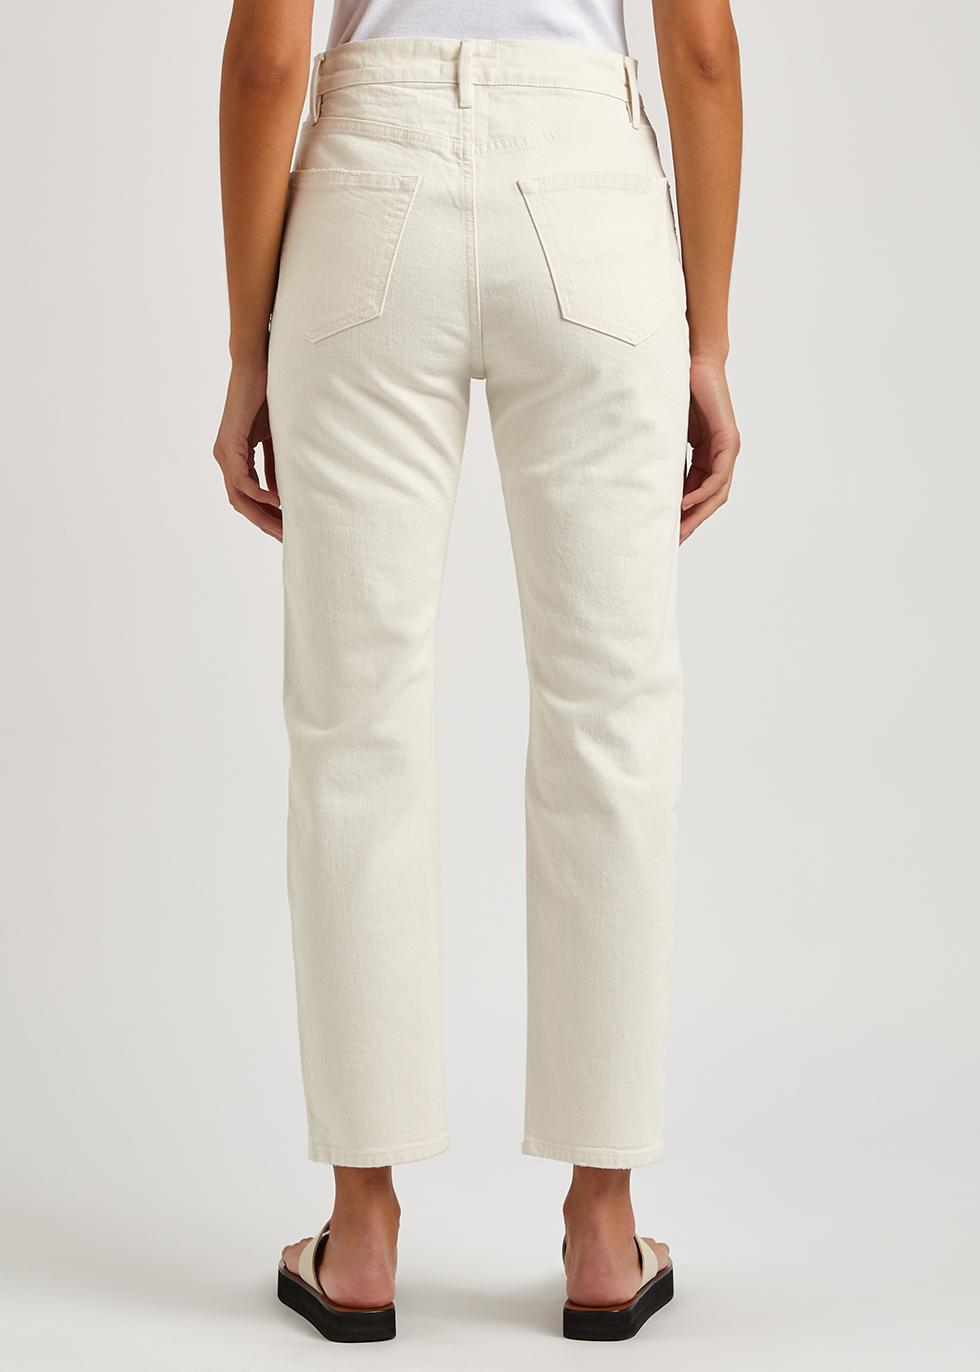 FRAME Le Original Cream Straight-leg Jeans in White | Lyst